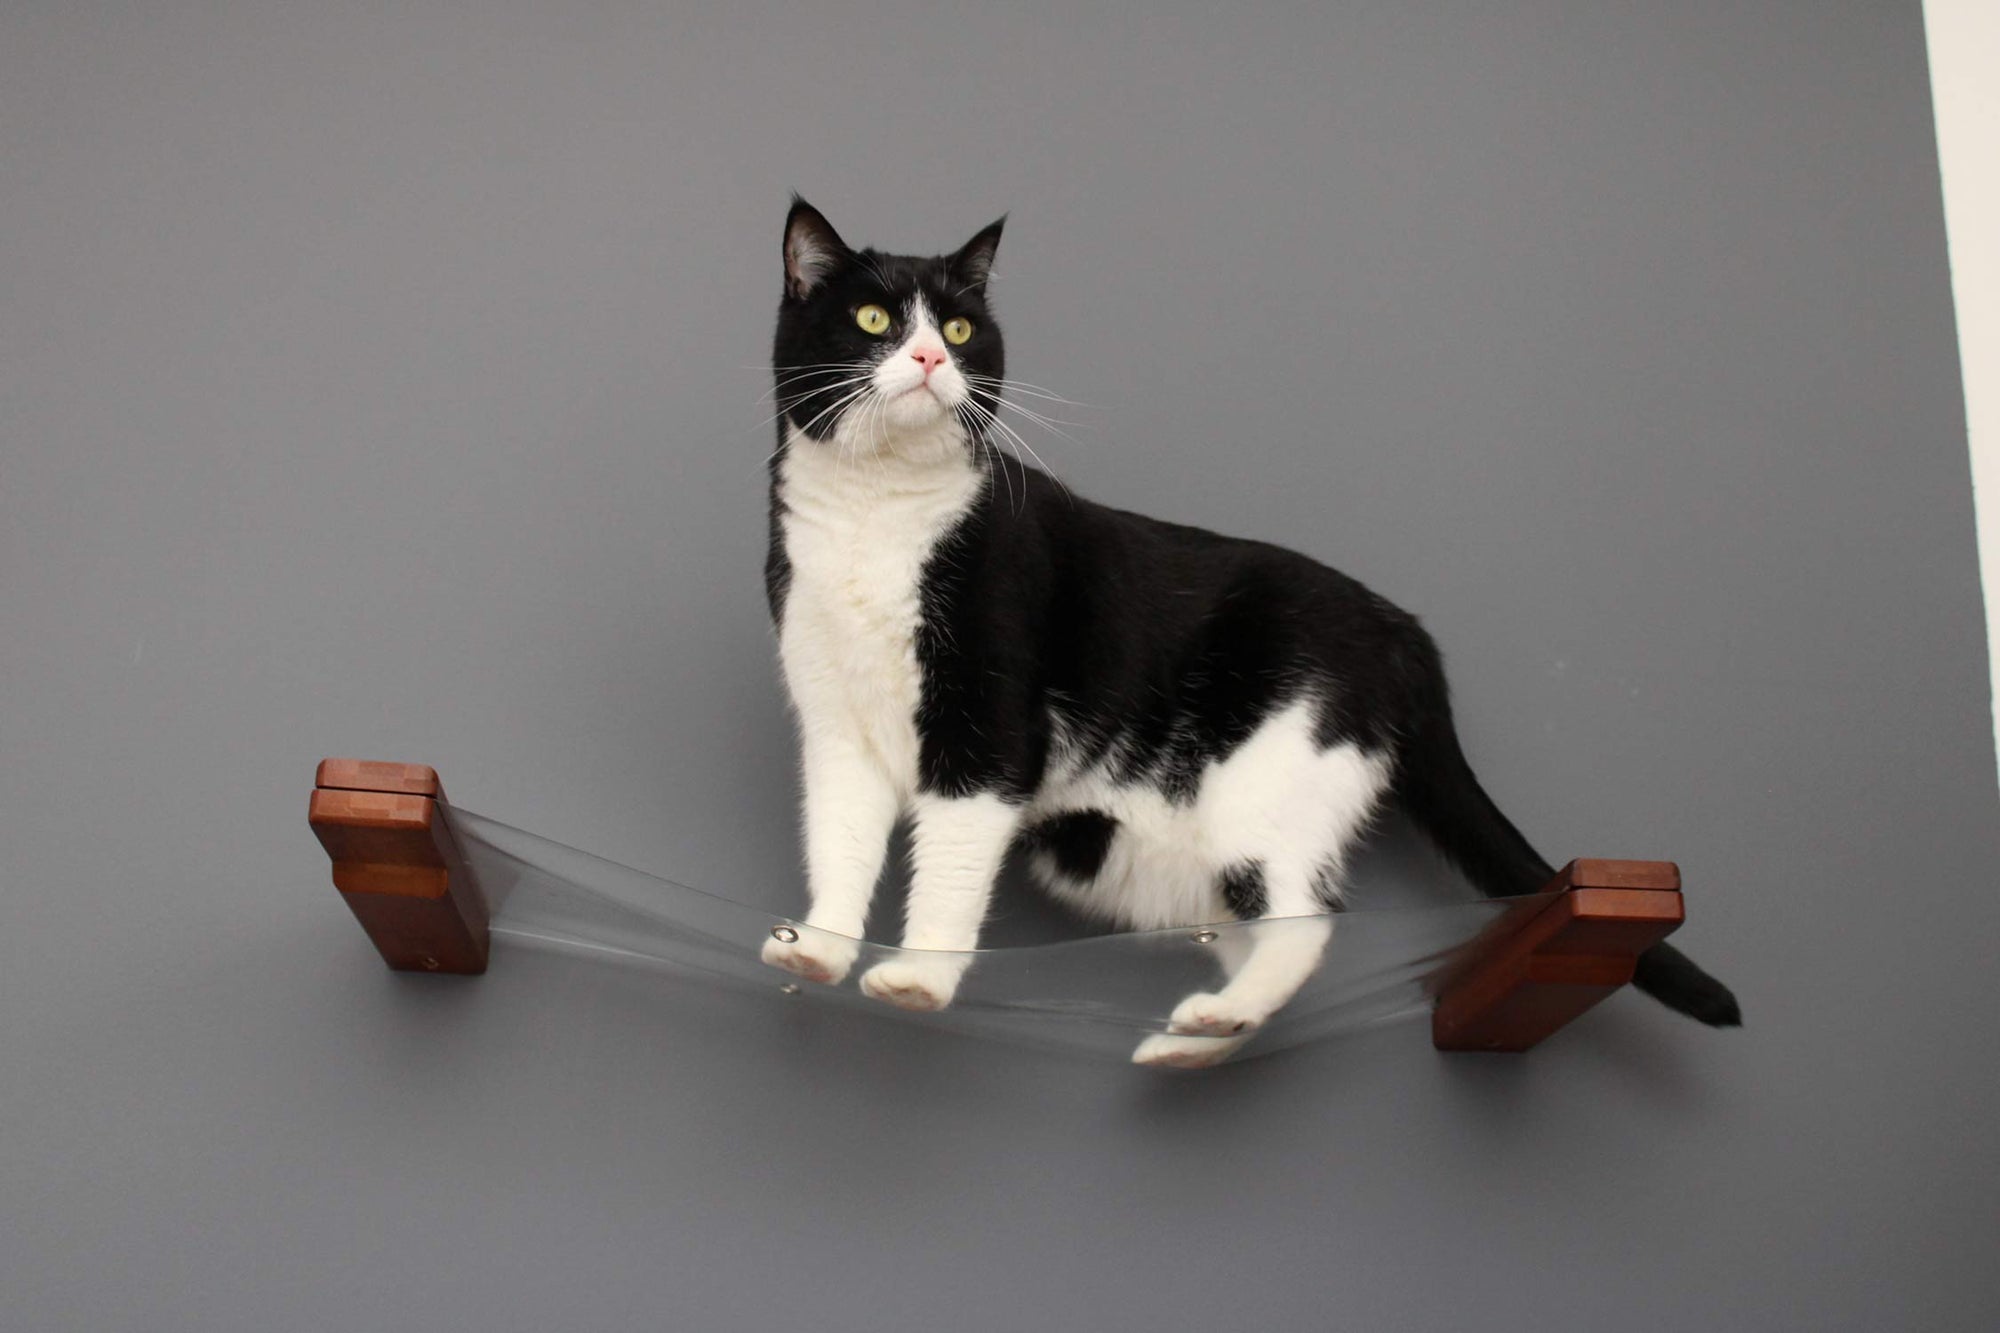 Cat on a clear cat hammock